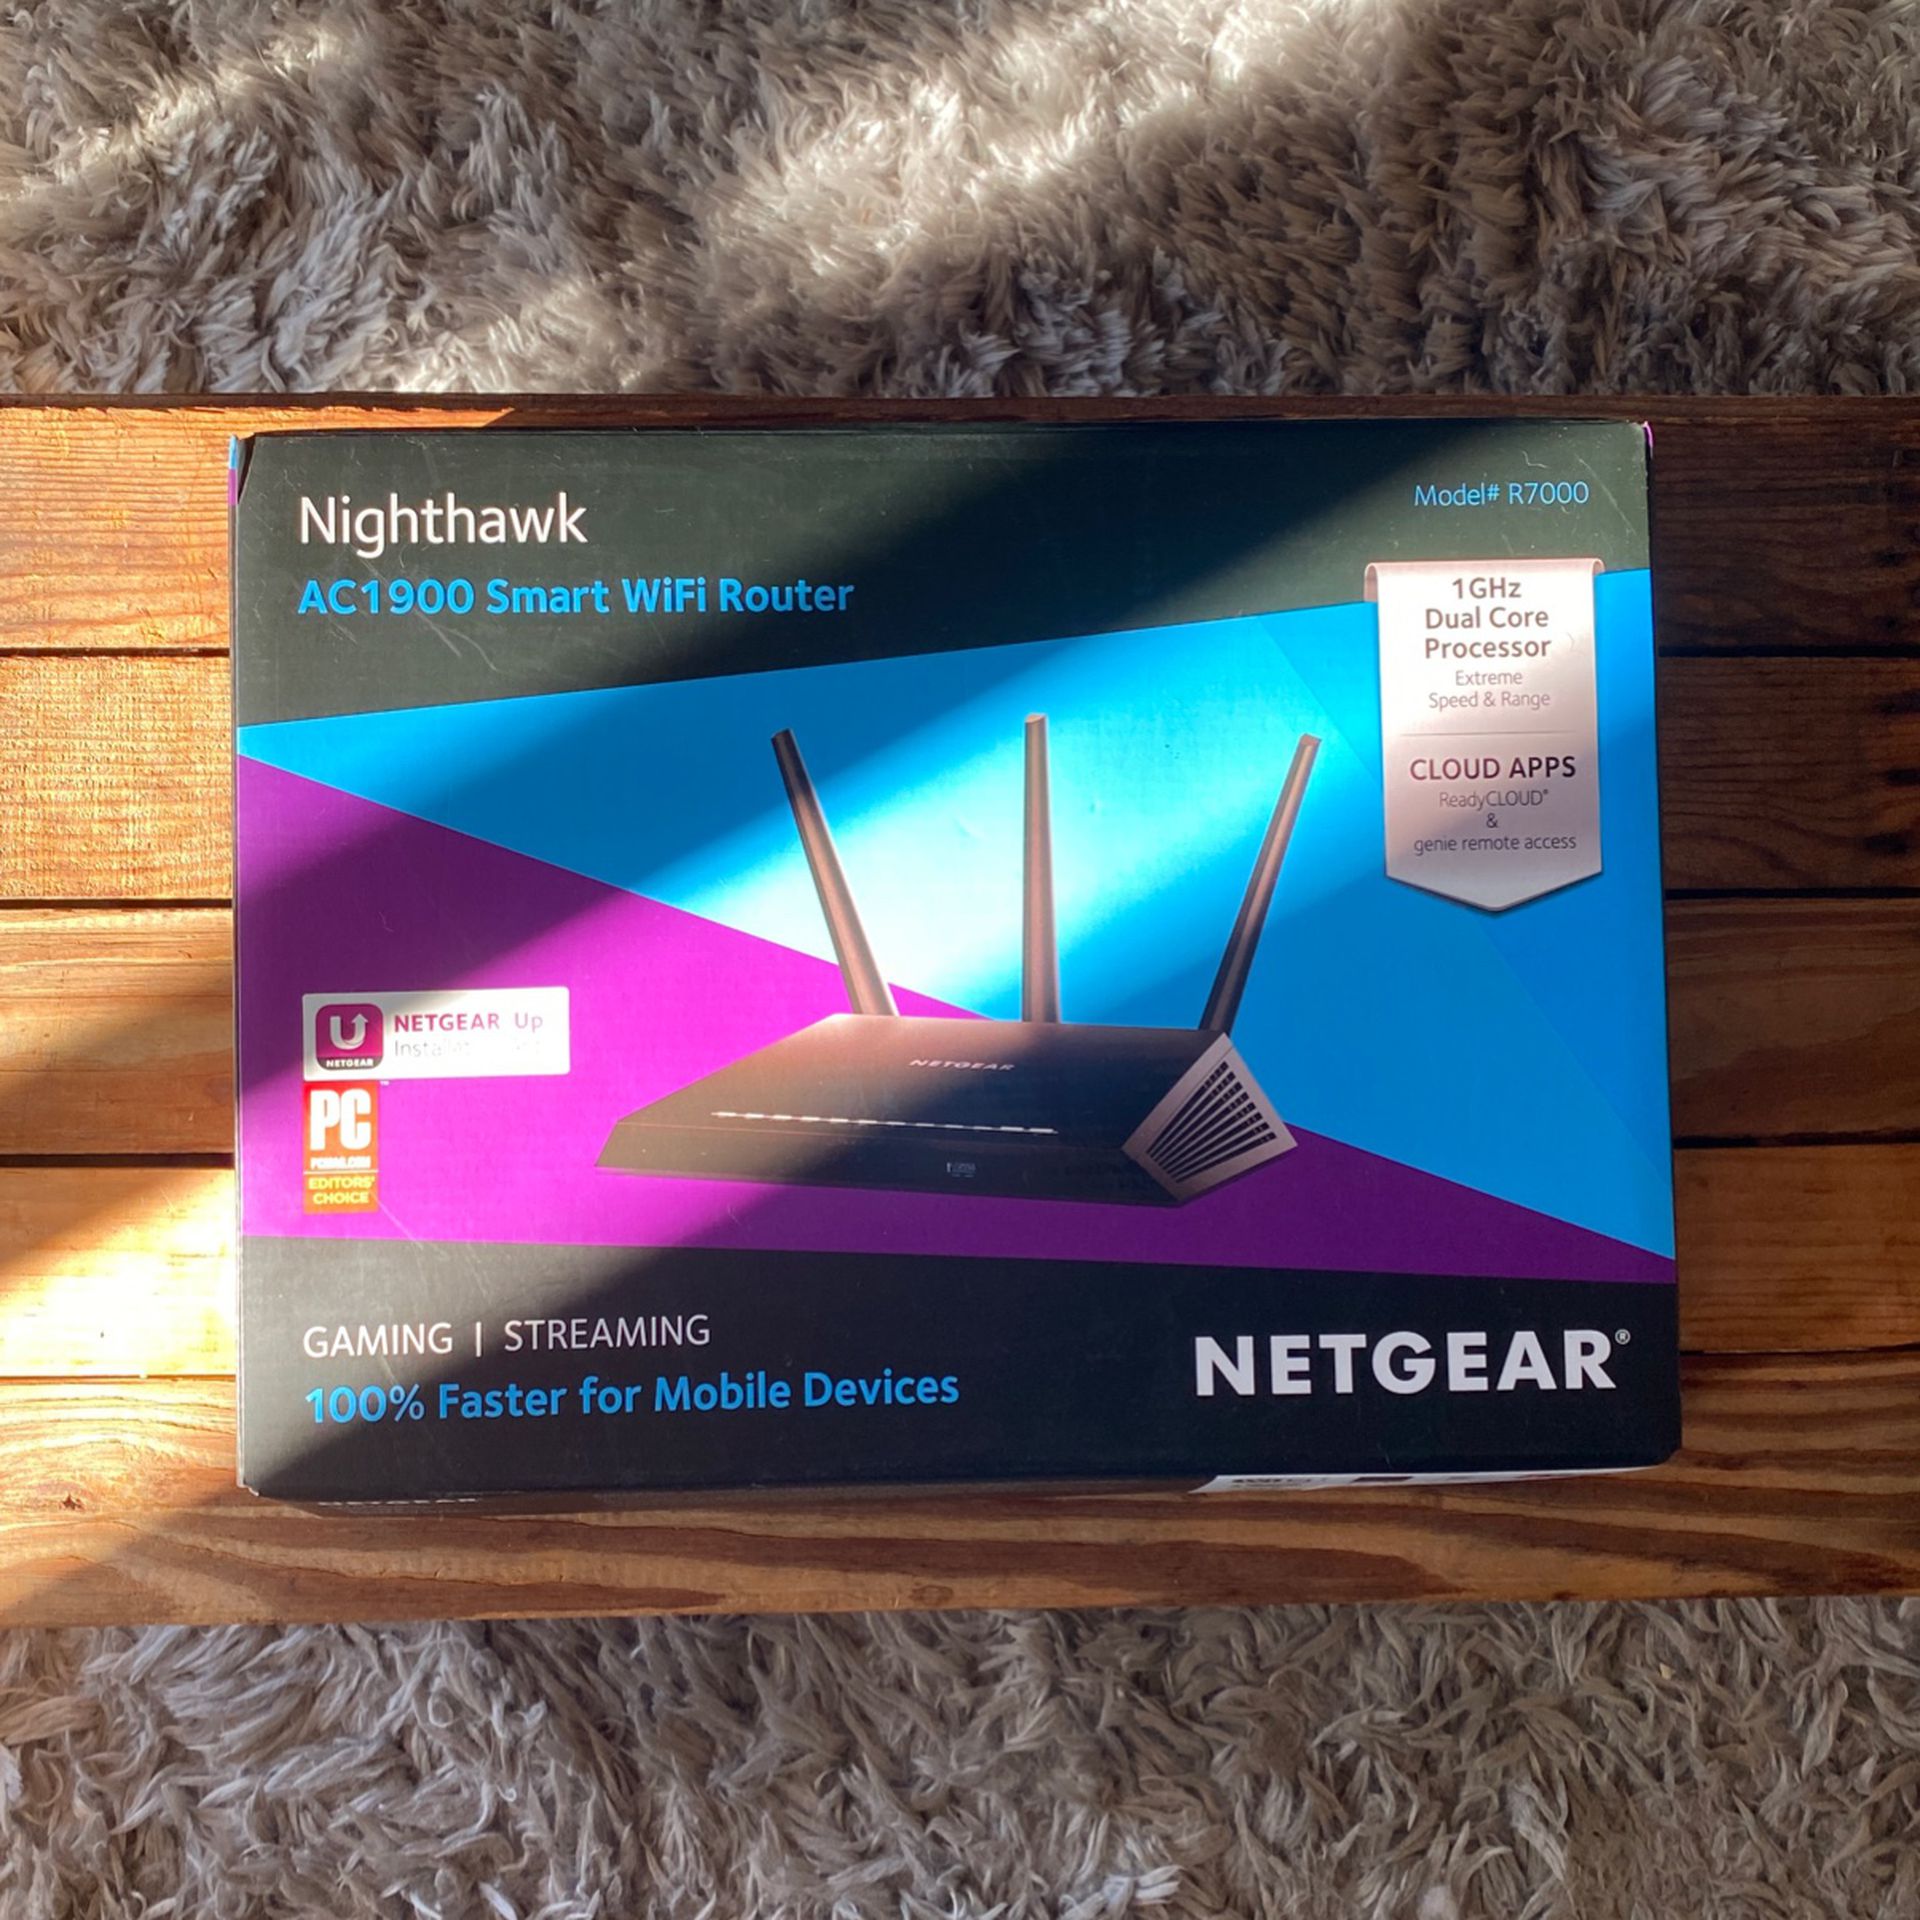 NETGEAR Nighthawk AC1900 Smart WiFi Router – Dual Band Gigabit